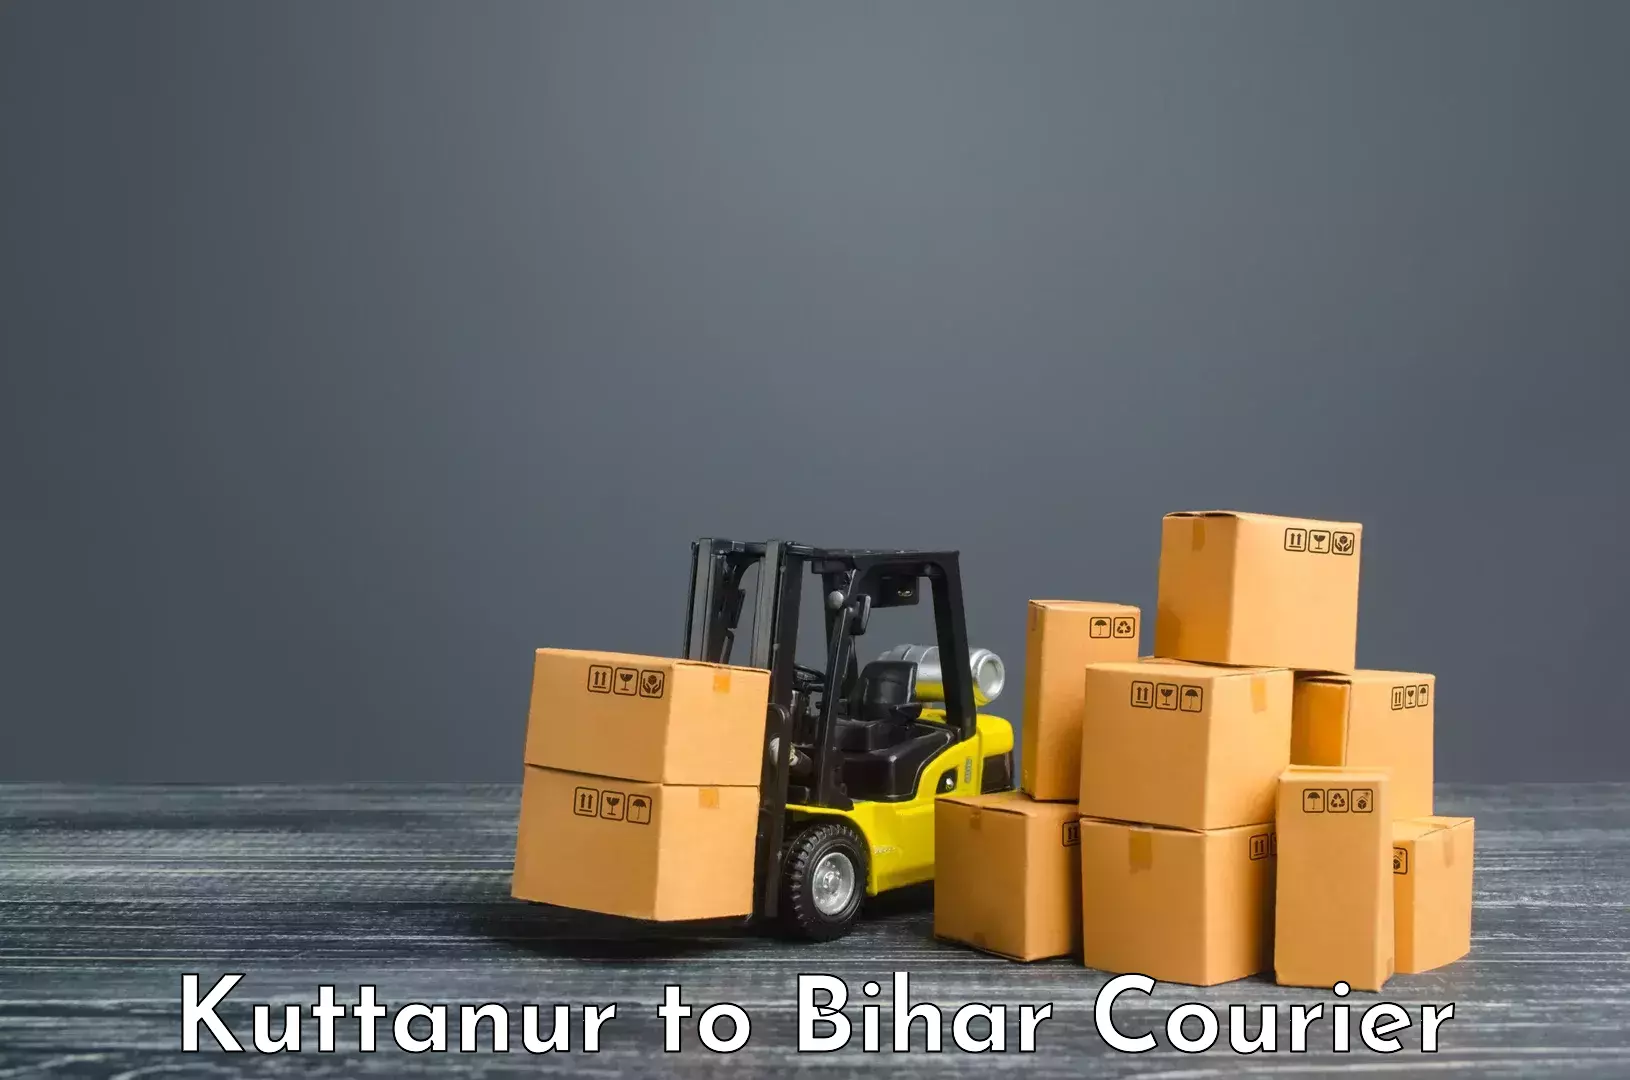 Courier service innovation Kuttanur to Bihar